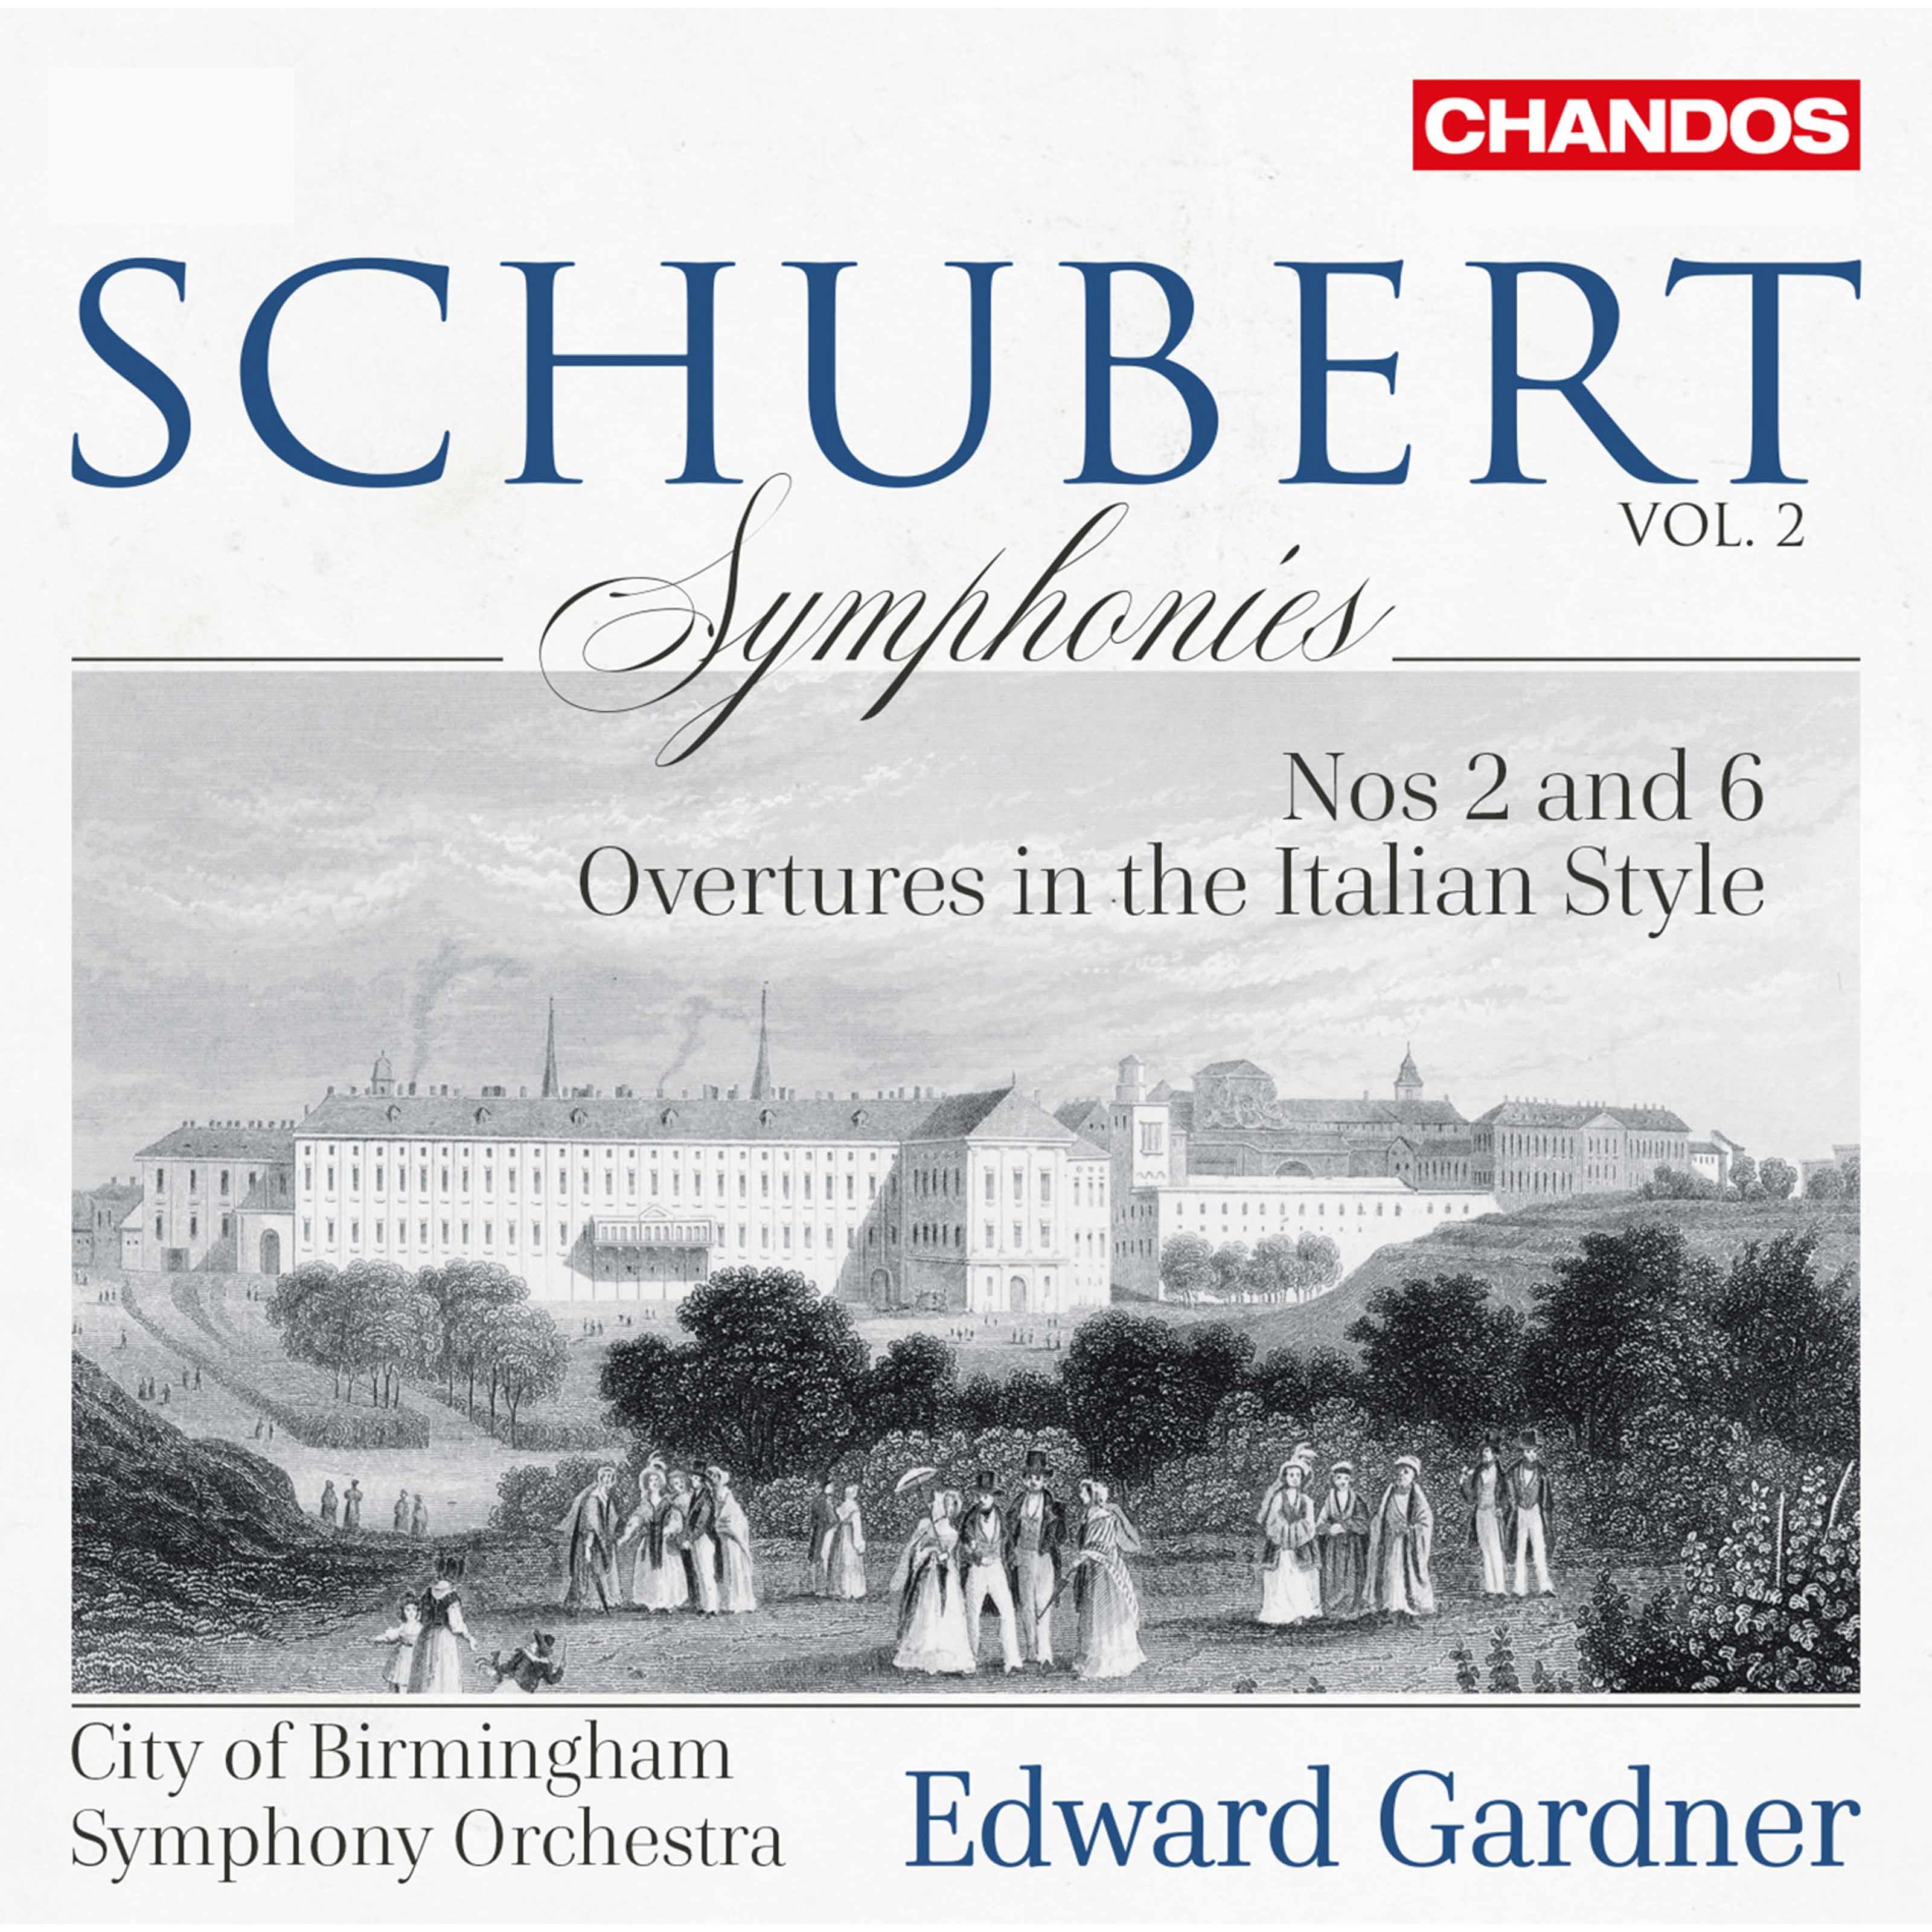 City of Birmingham Symphony Orchestra, Edward Gardner – Schubert: Symphonies, Vol. 2 – Nos. 2 & 6 & Italian Overtures (2020) [FLAC 24bit/96kHz]